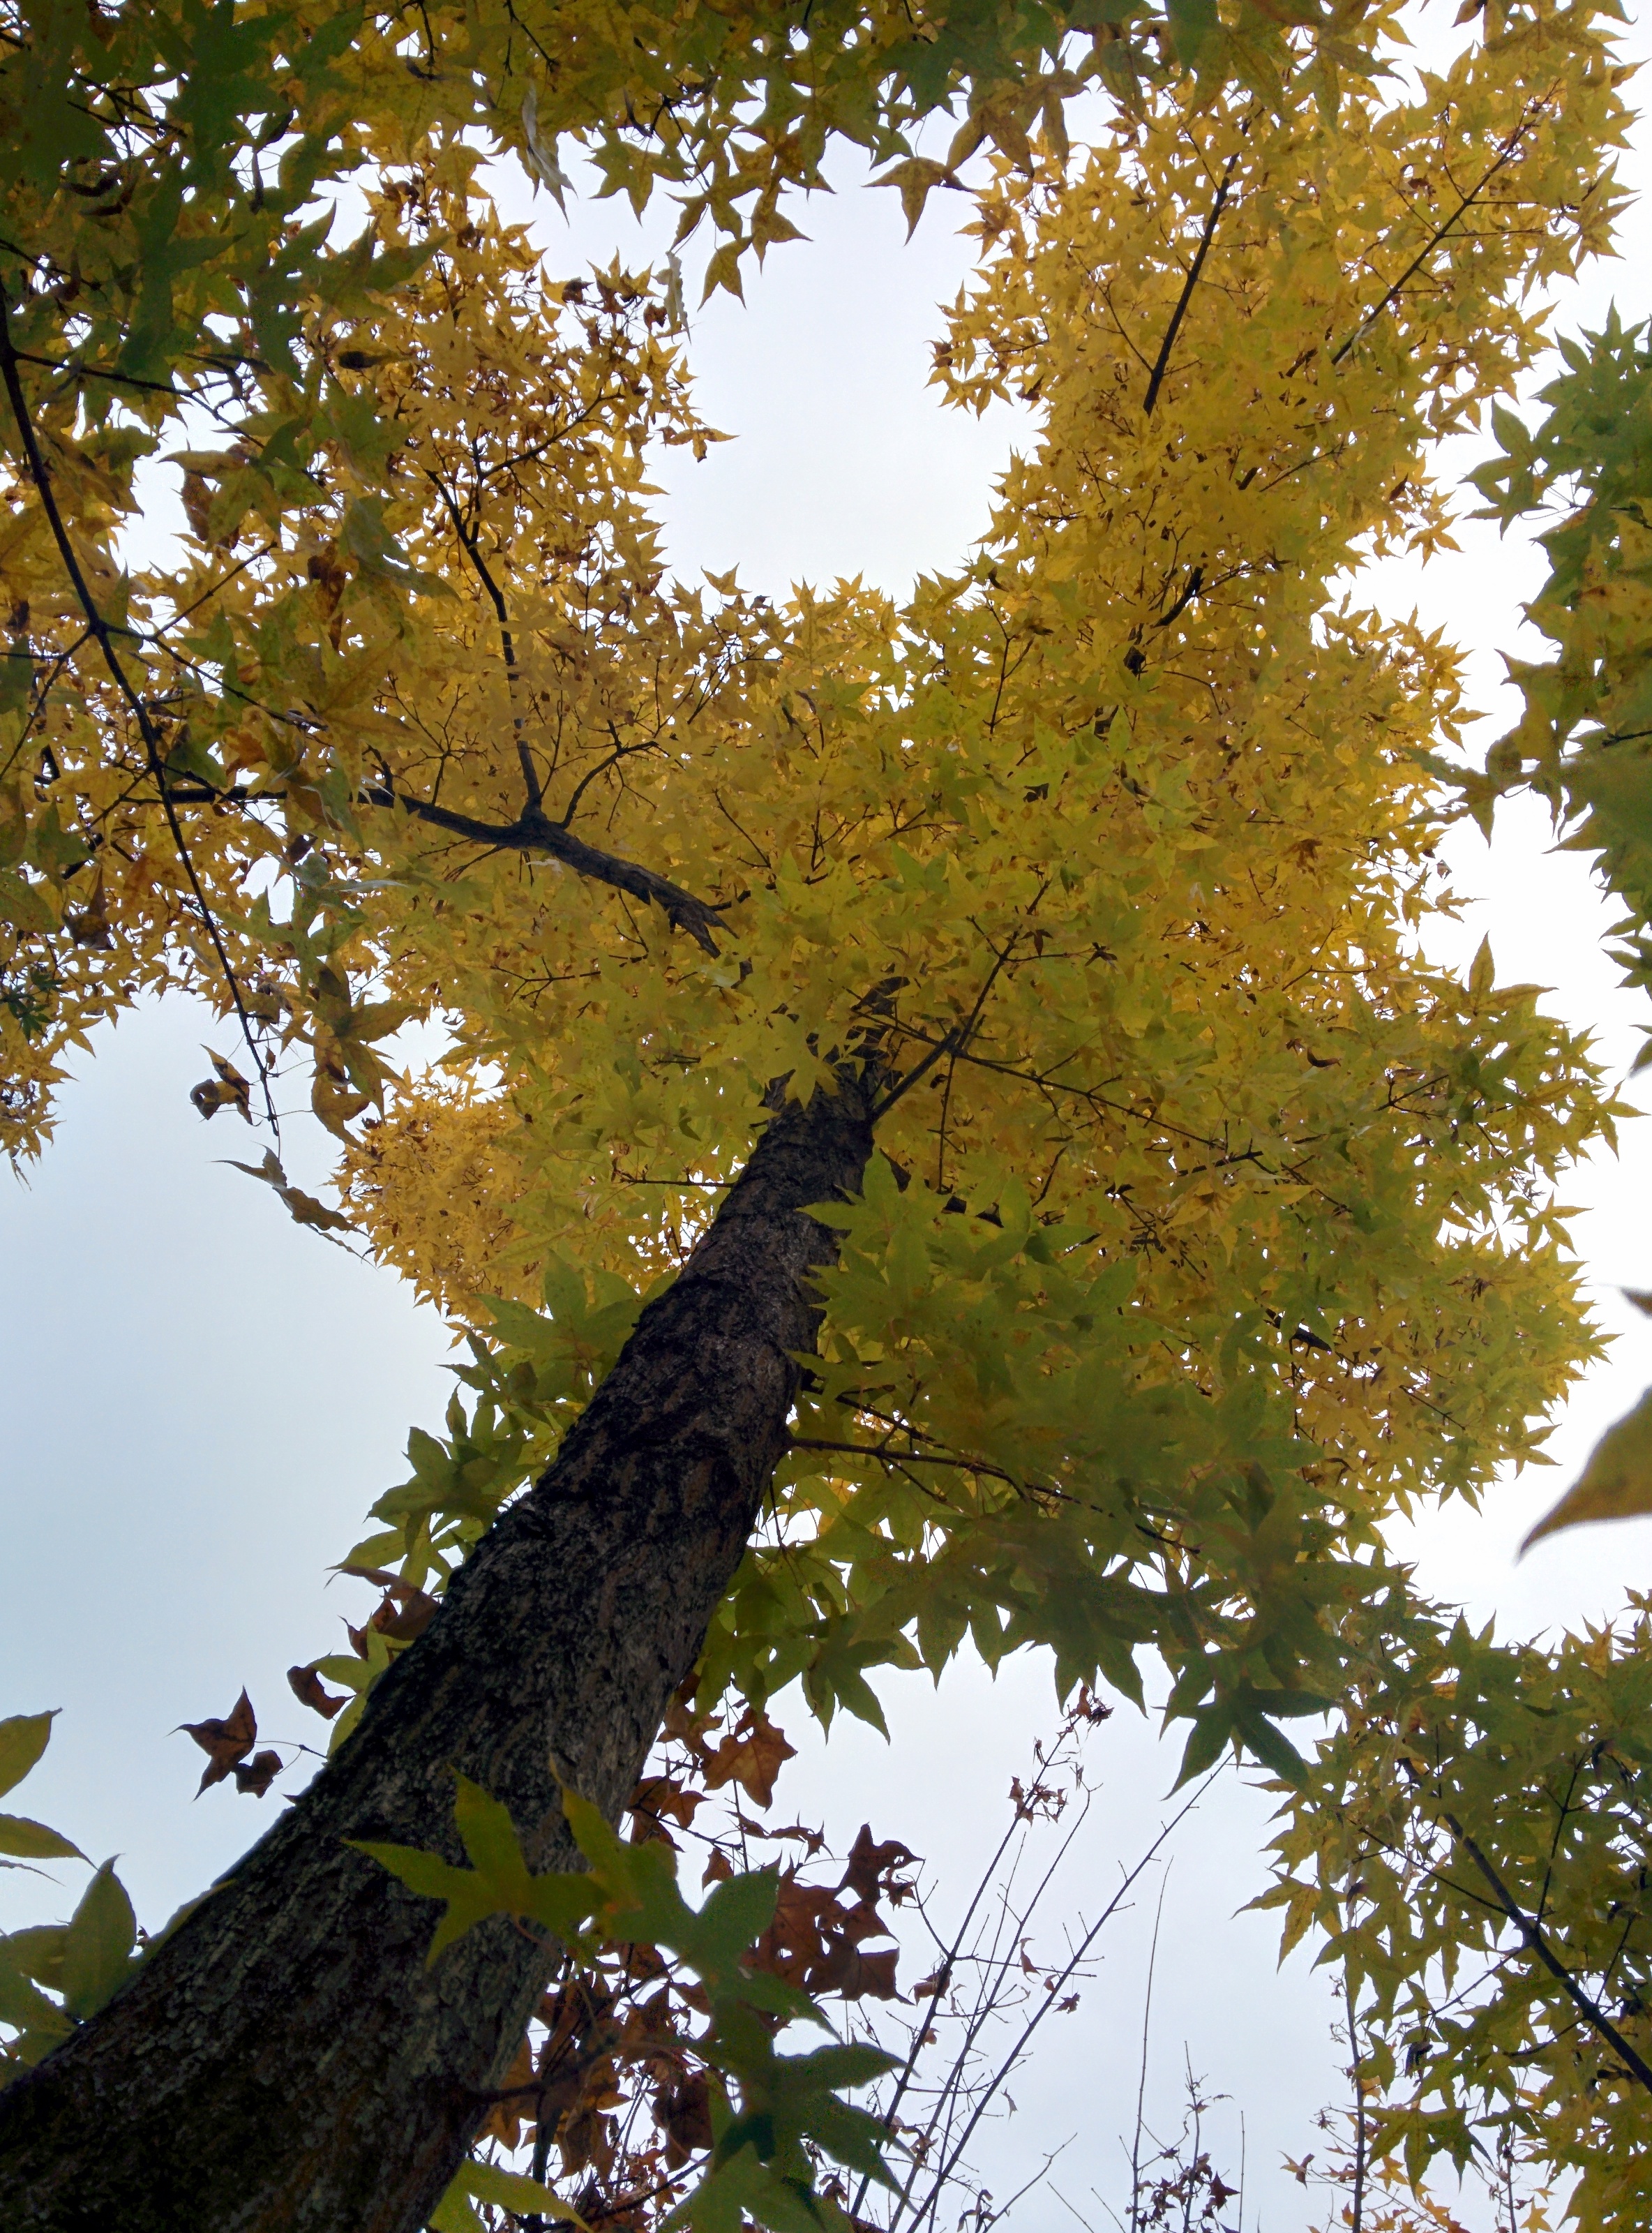 IMG_20151106_145442.jpg 다섯갈래로 잎이 갈라지는 키큰 고로쇠나무